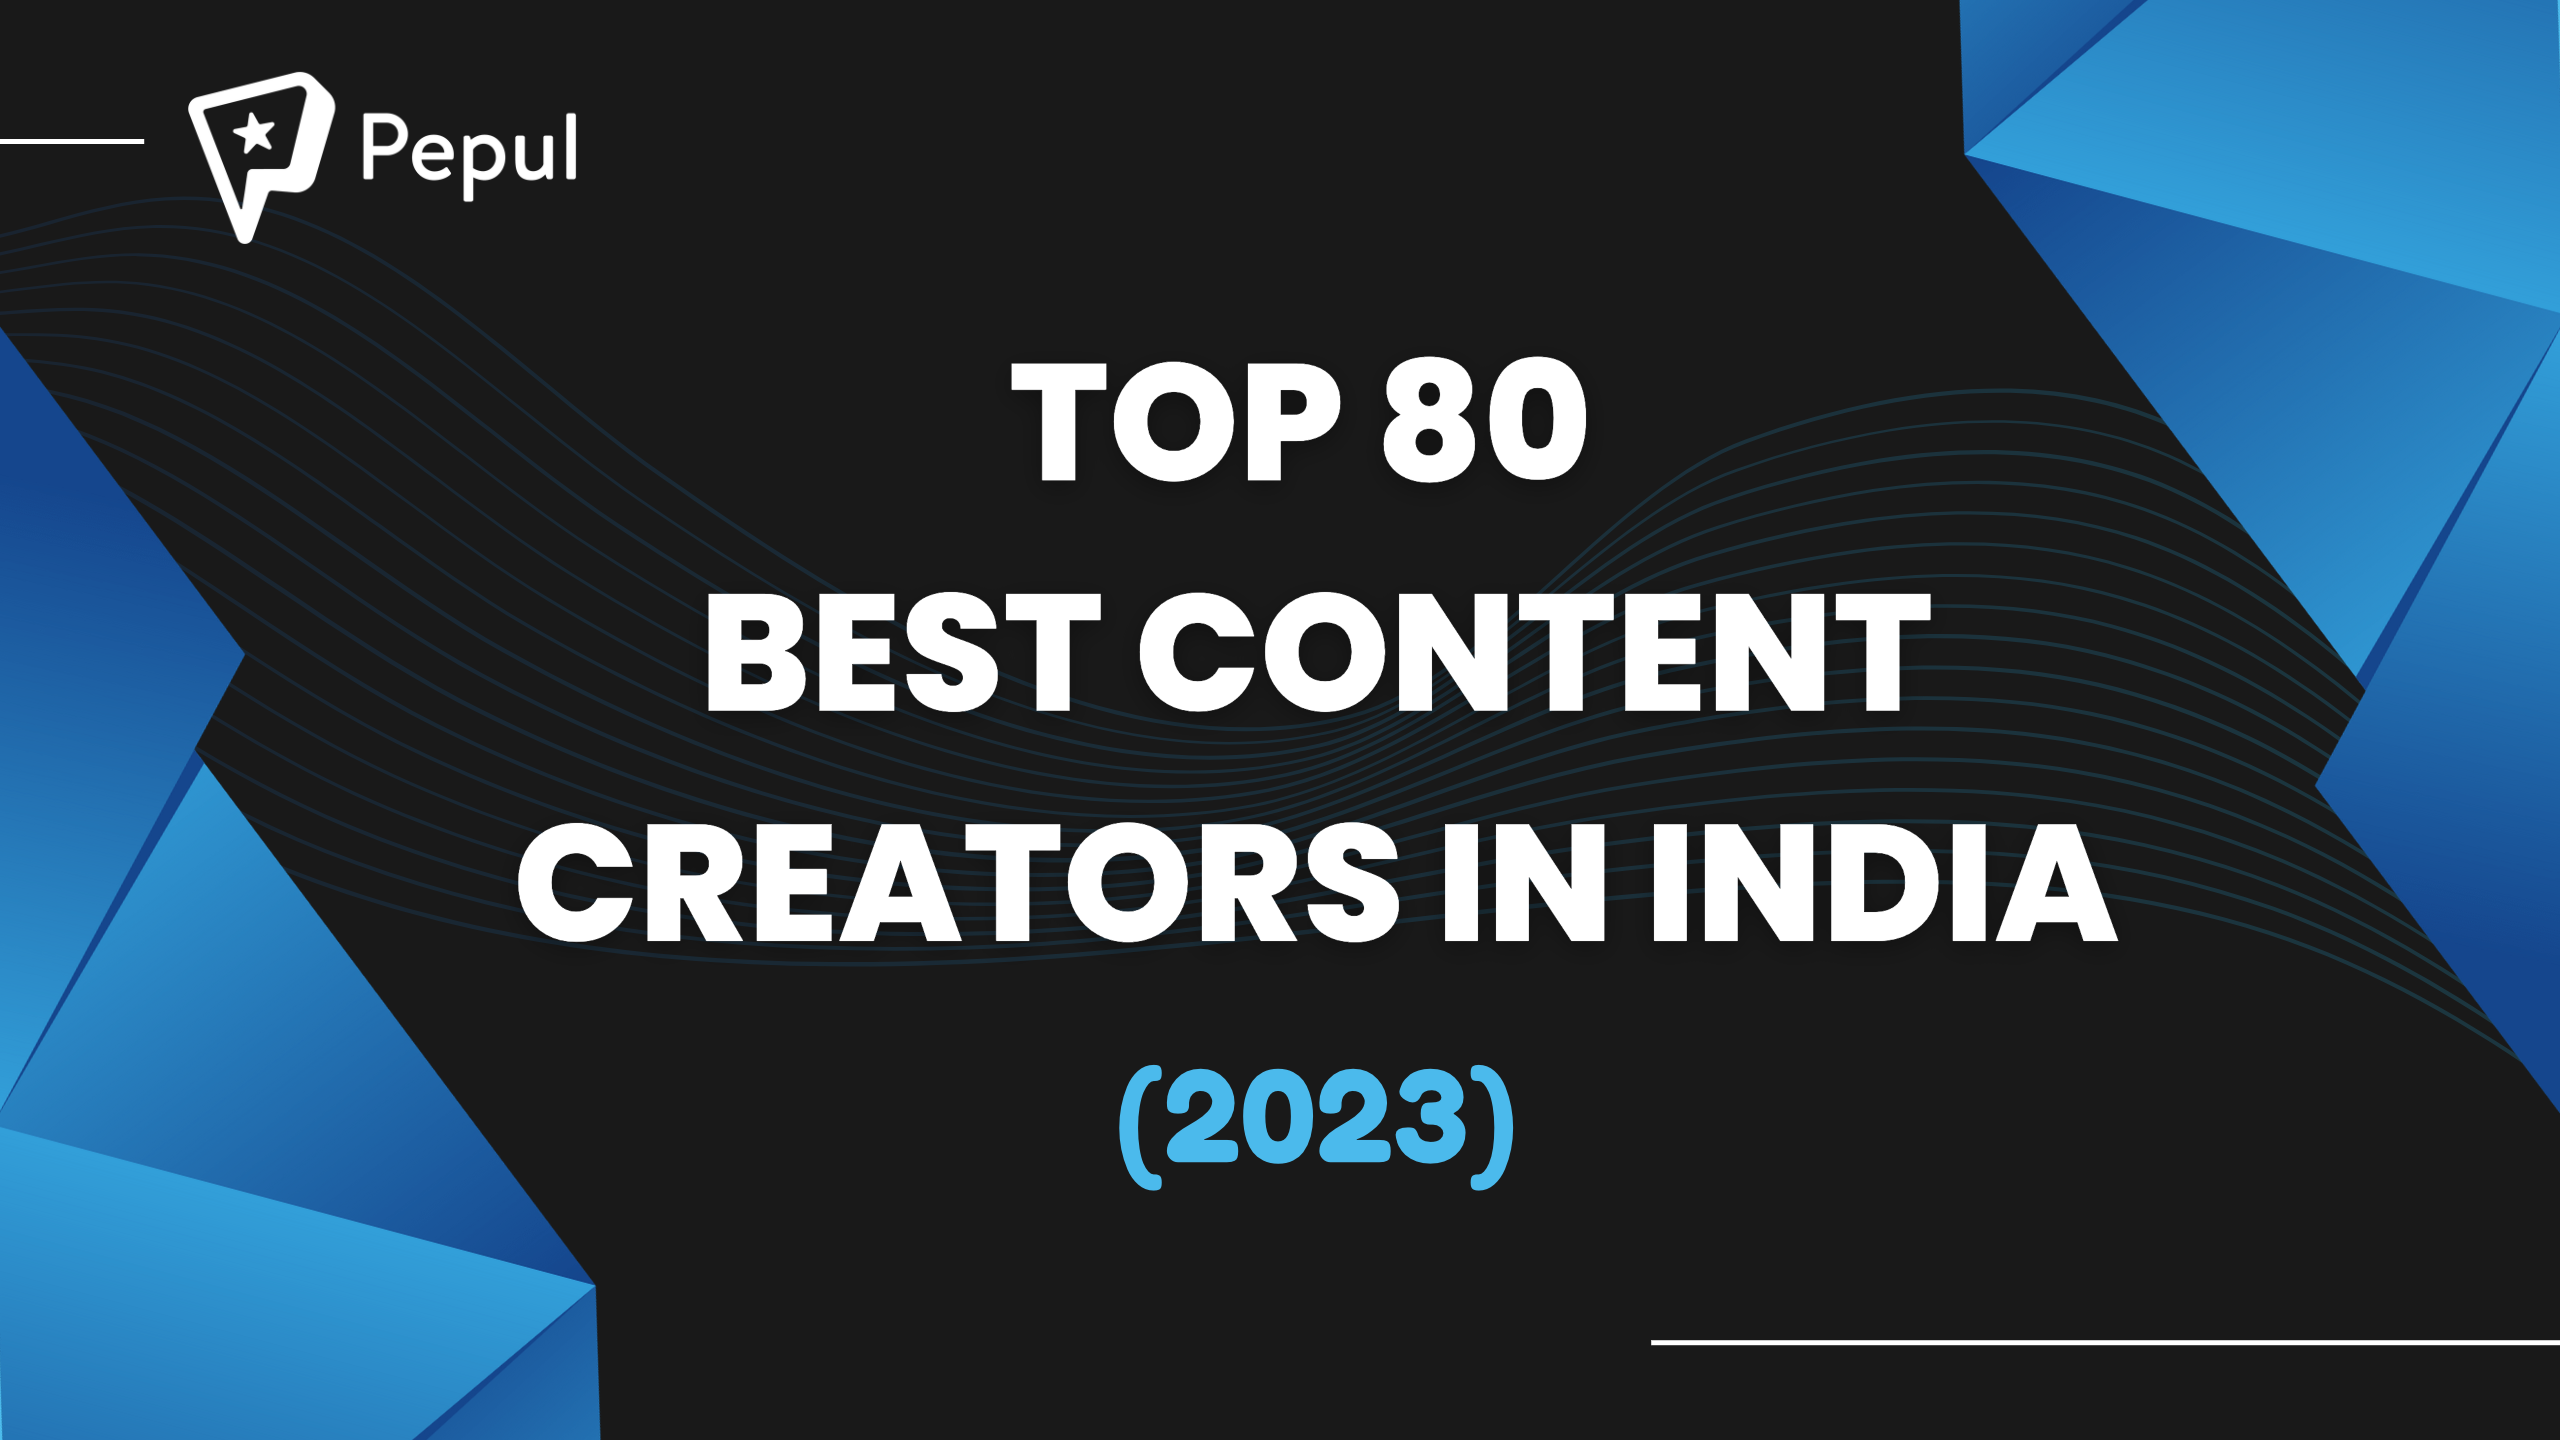 Top 80 Best Content Creators in India in 2023